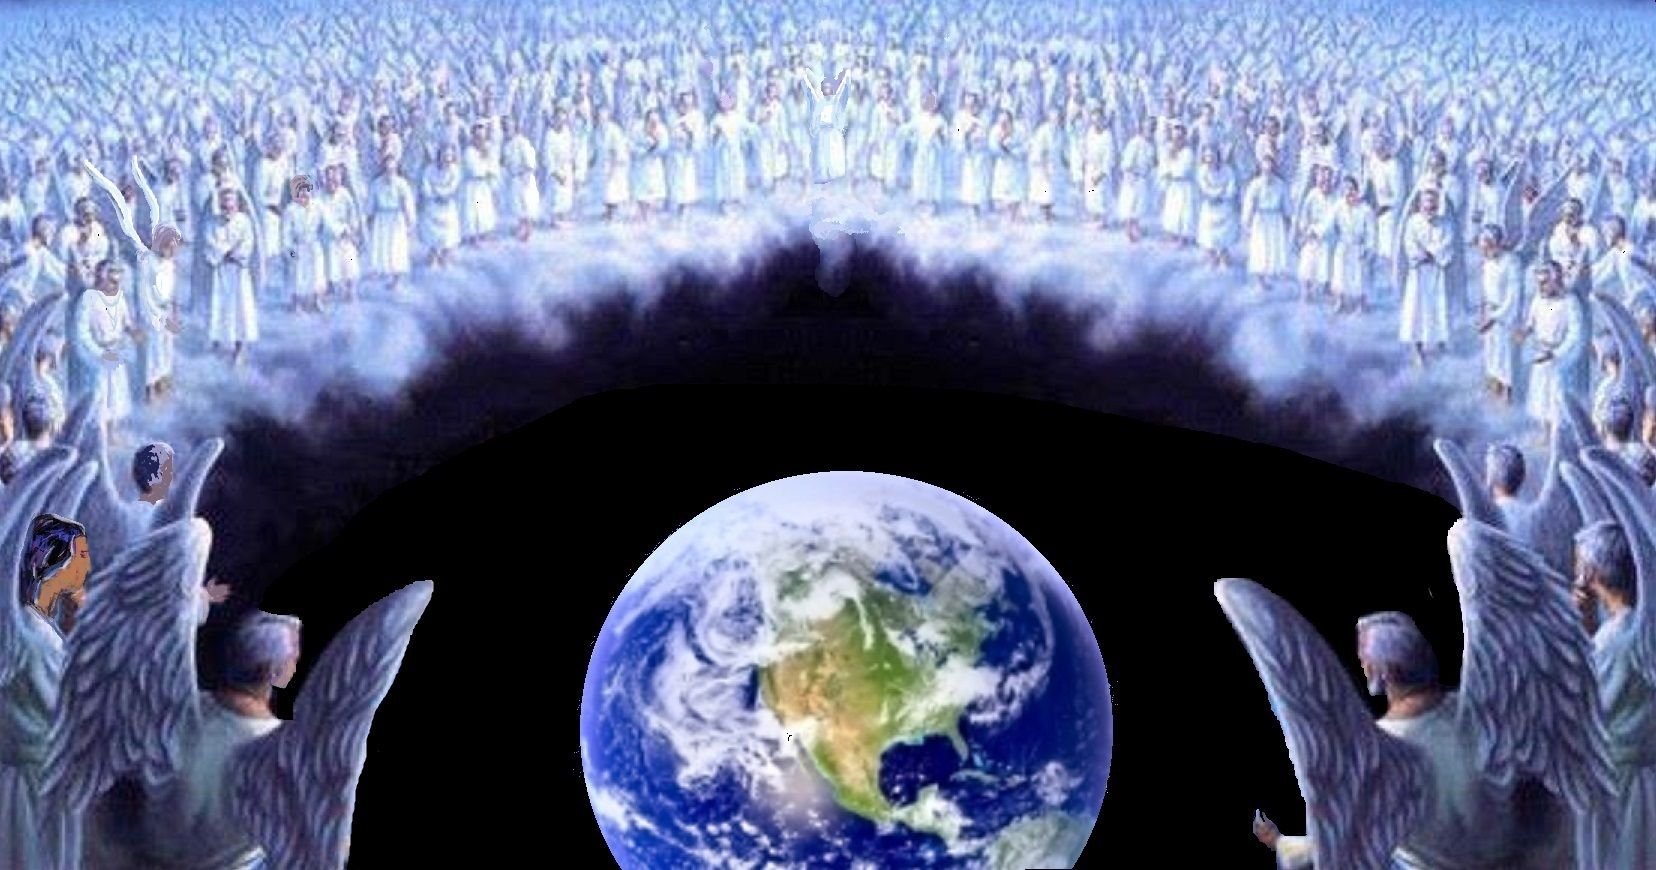 Много на земле зла. Ангел на земле. Ангелы земные и небесные. Ангелы и Планета земля. Мир на планете земля.